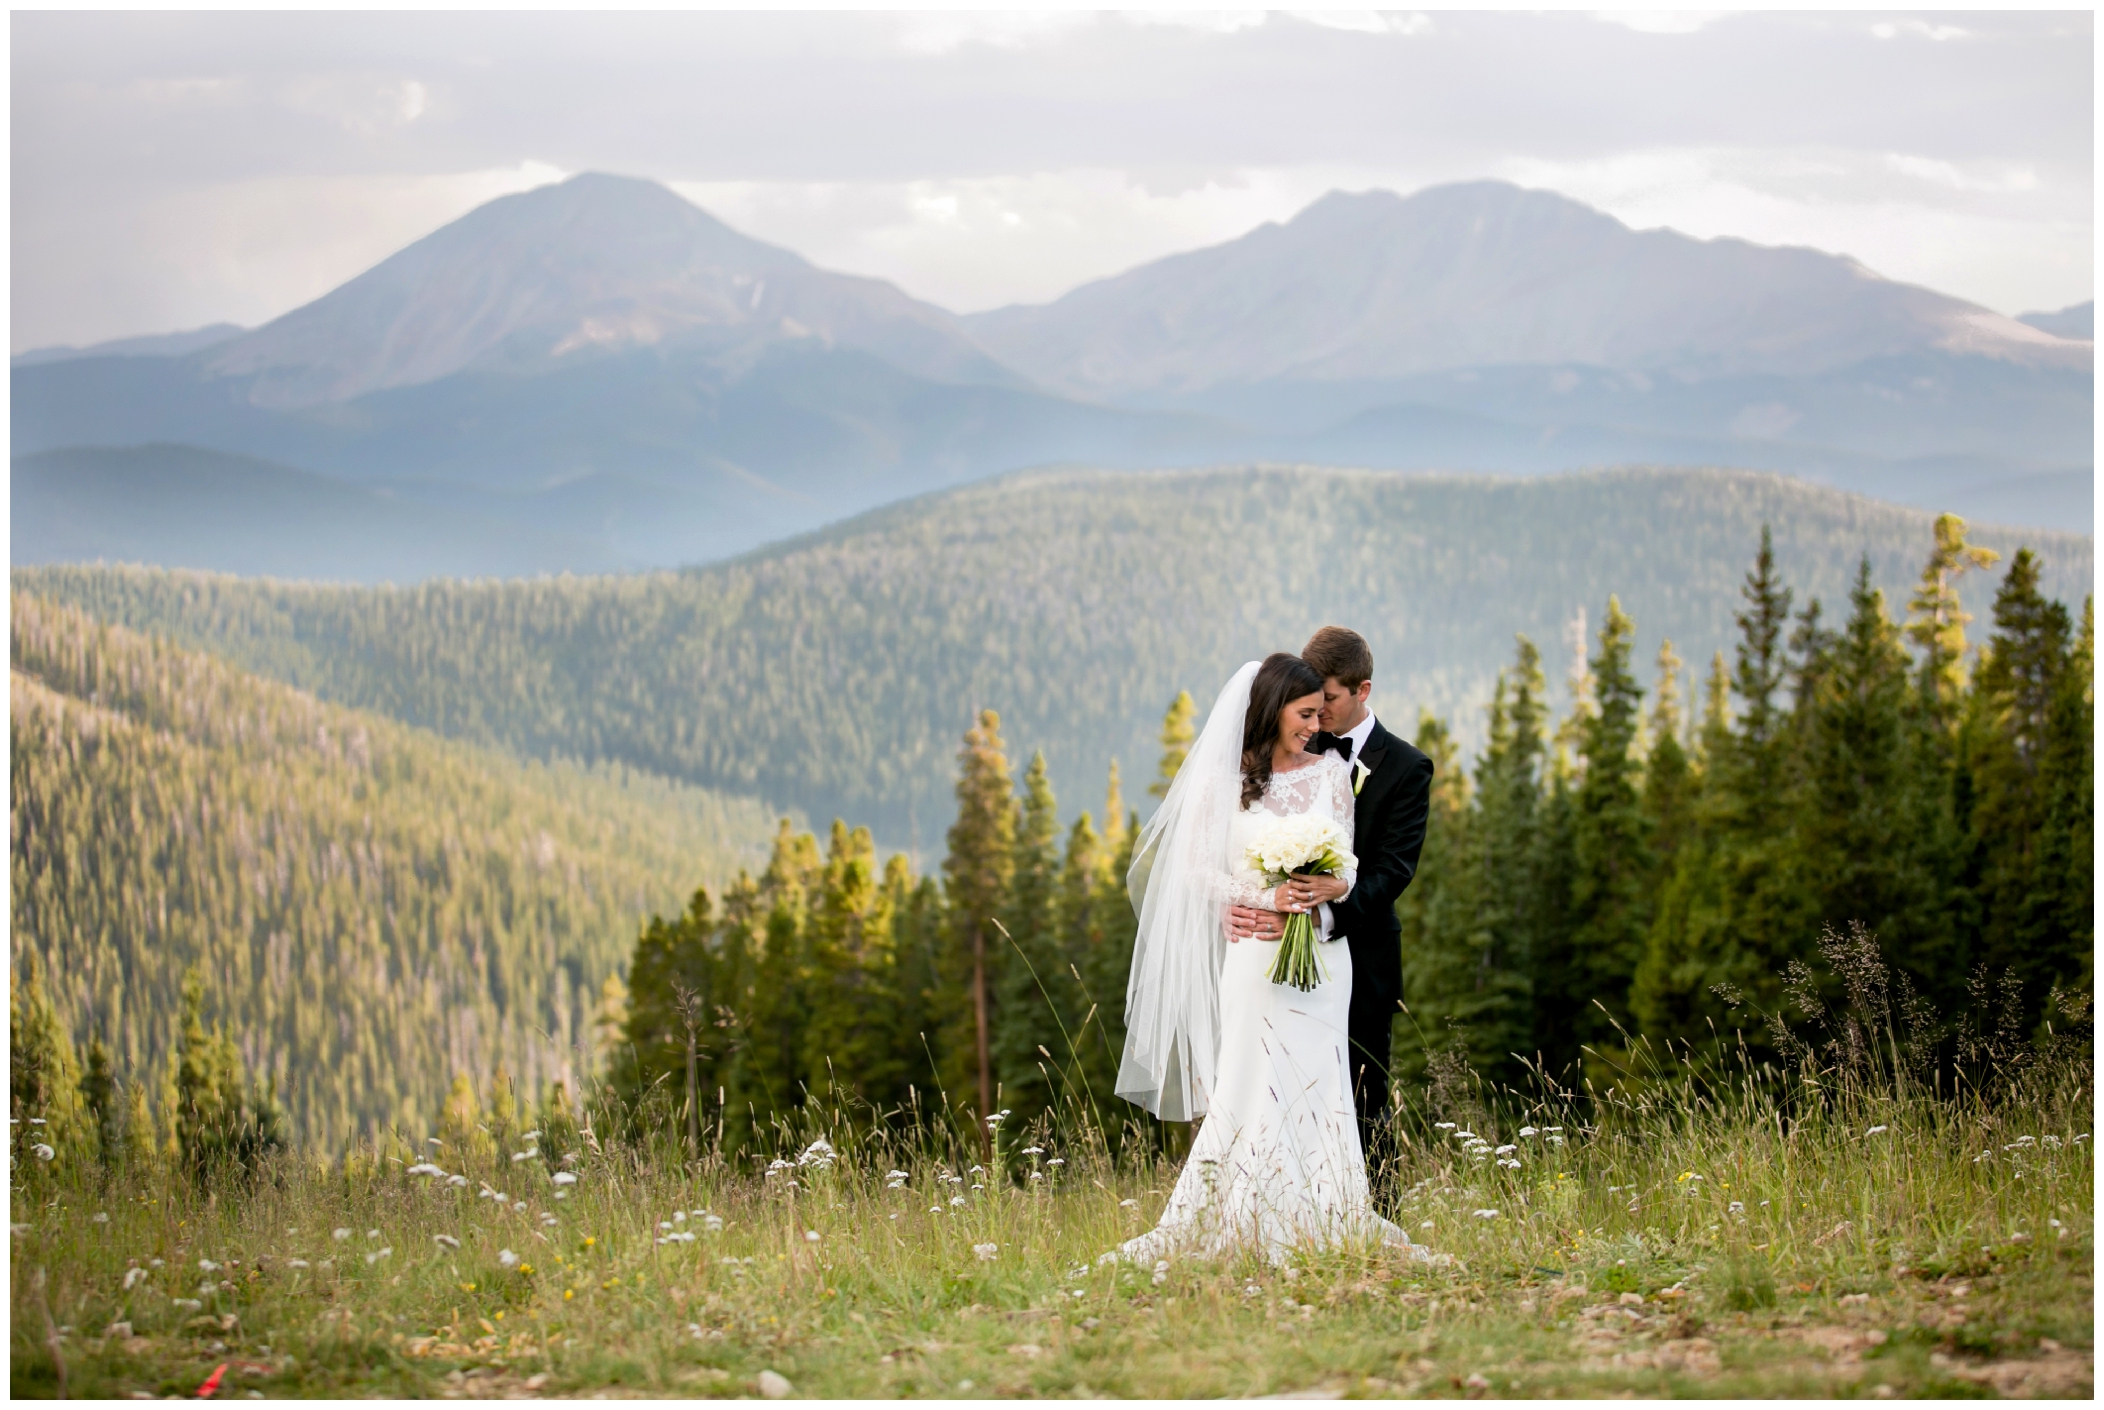 Keystone Colorado wedding portraits at Timber Ridge Lodge